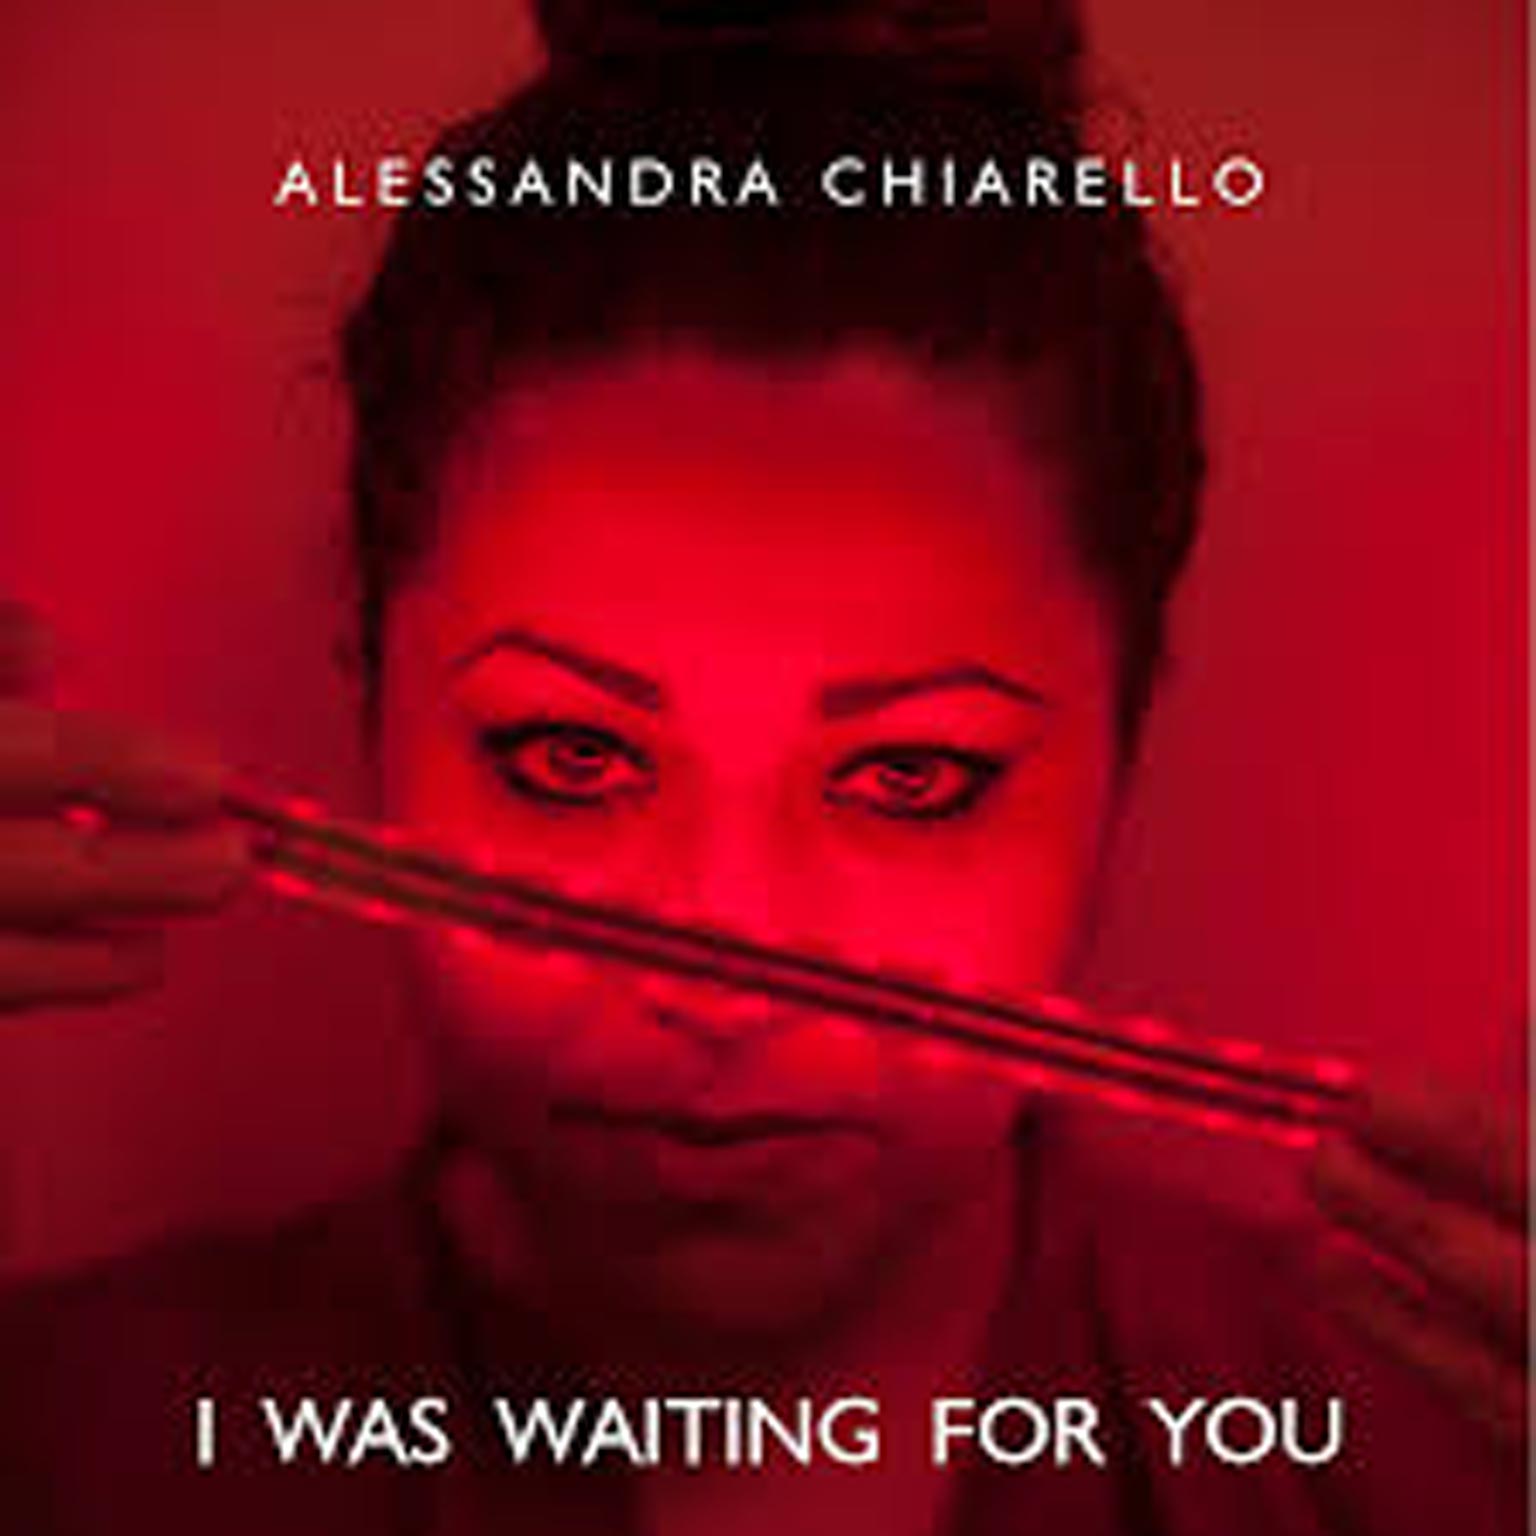 Alessandra Chiarello – ” I was waiting for you”